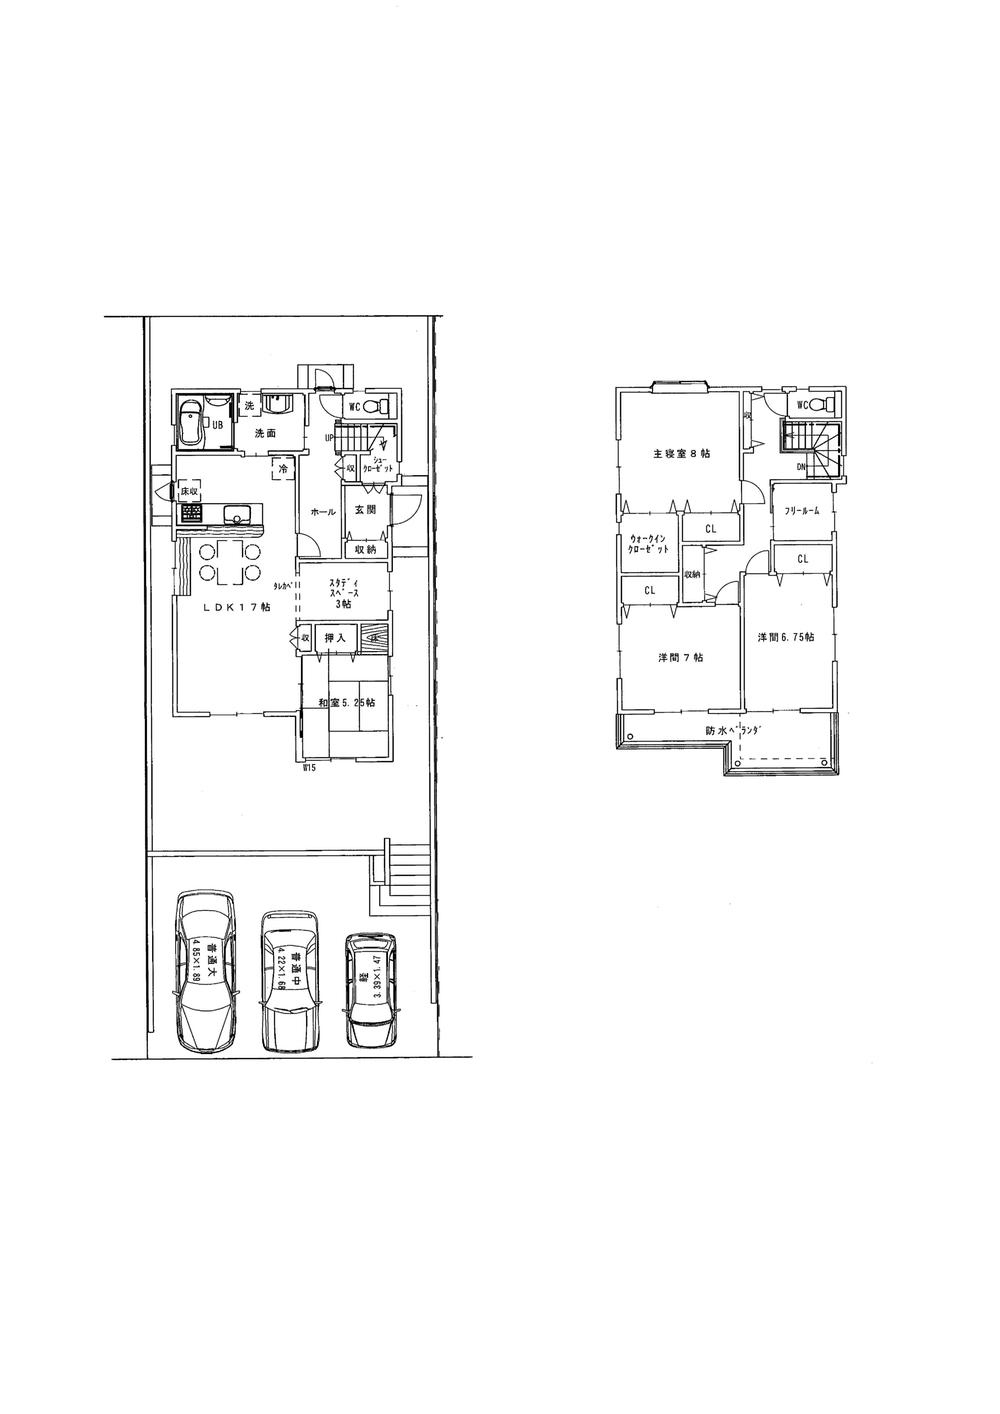 Building plan example (floor plan). Building plan example 4LDK + 2S, Land price 2 million yen, Land area 189.28 sq m , Building price 27,590,000 yen, Building area 128.75 sq m